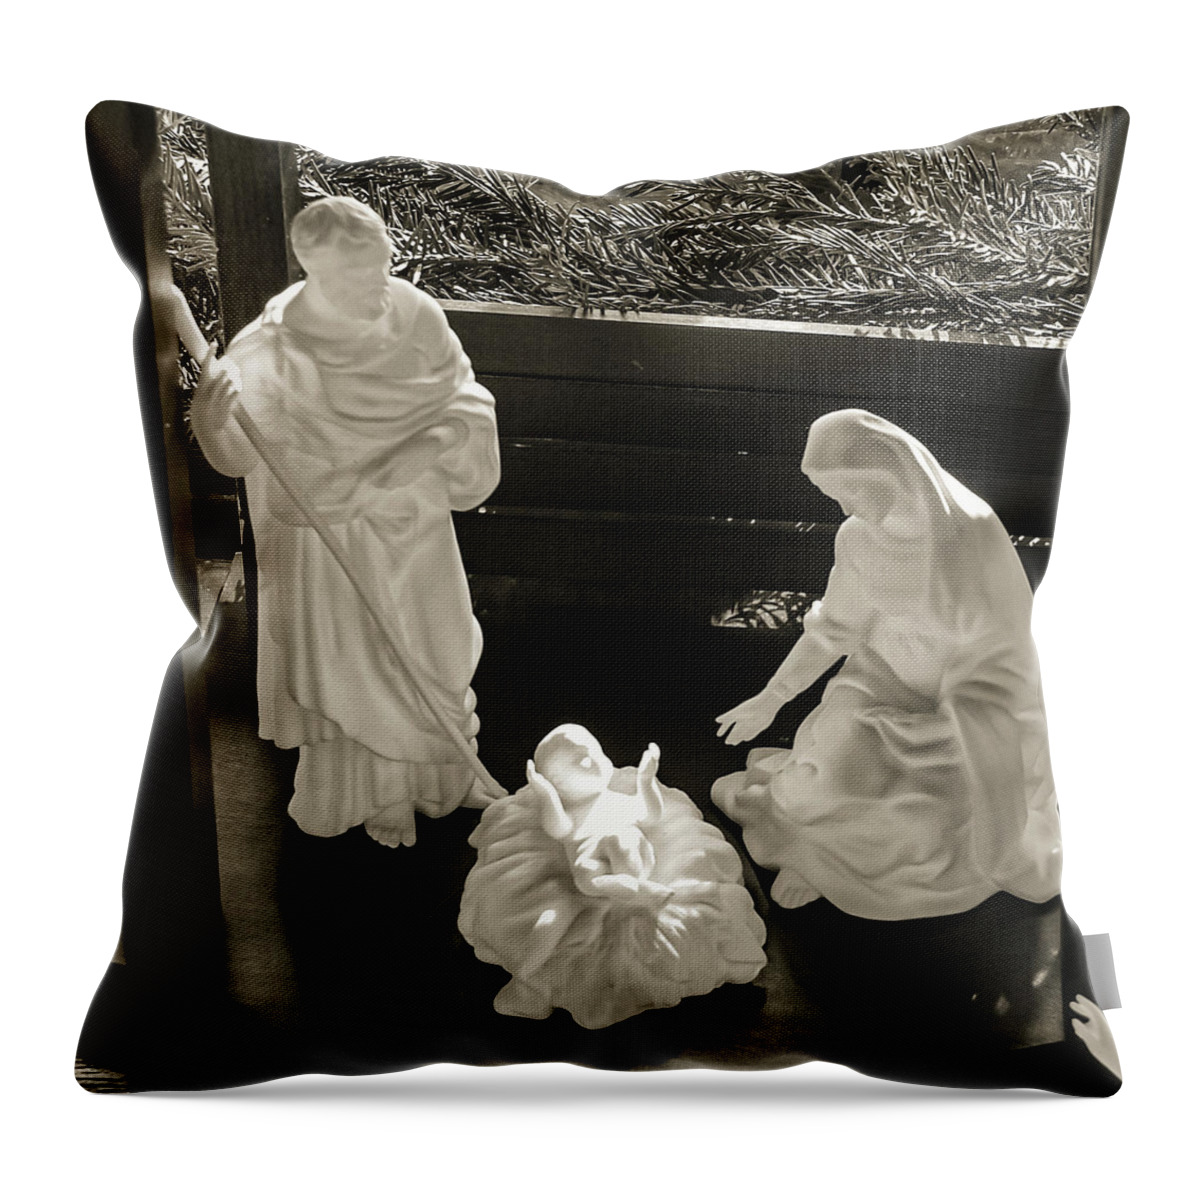 Nativity Mary Joseph Baby Jesus B&w Throw Pillow featuring the photograph Nativity2 by John Linnemeyer